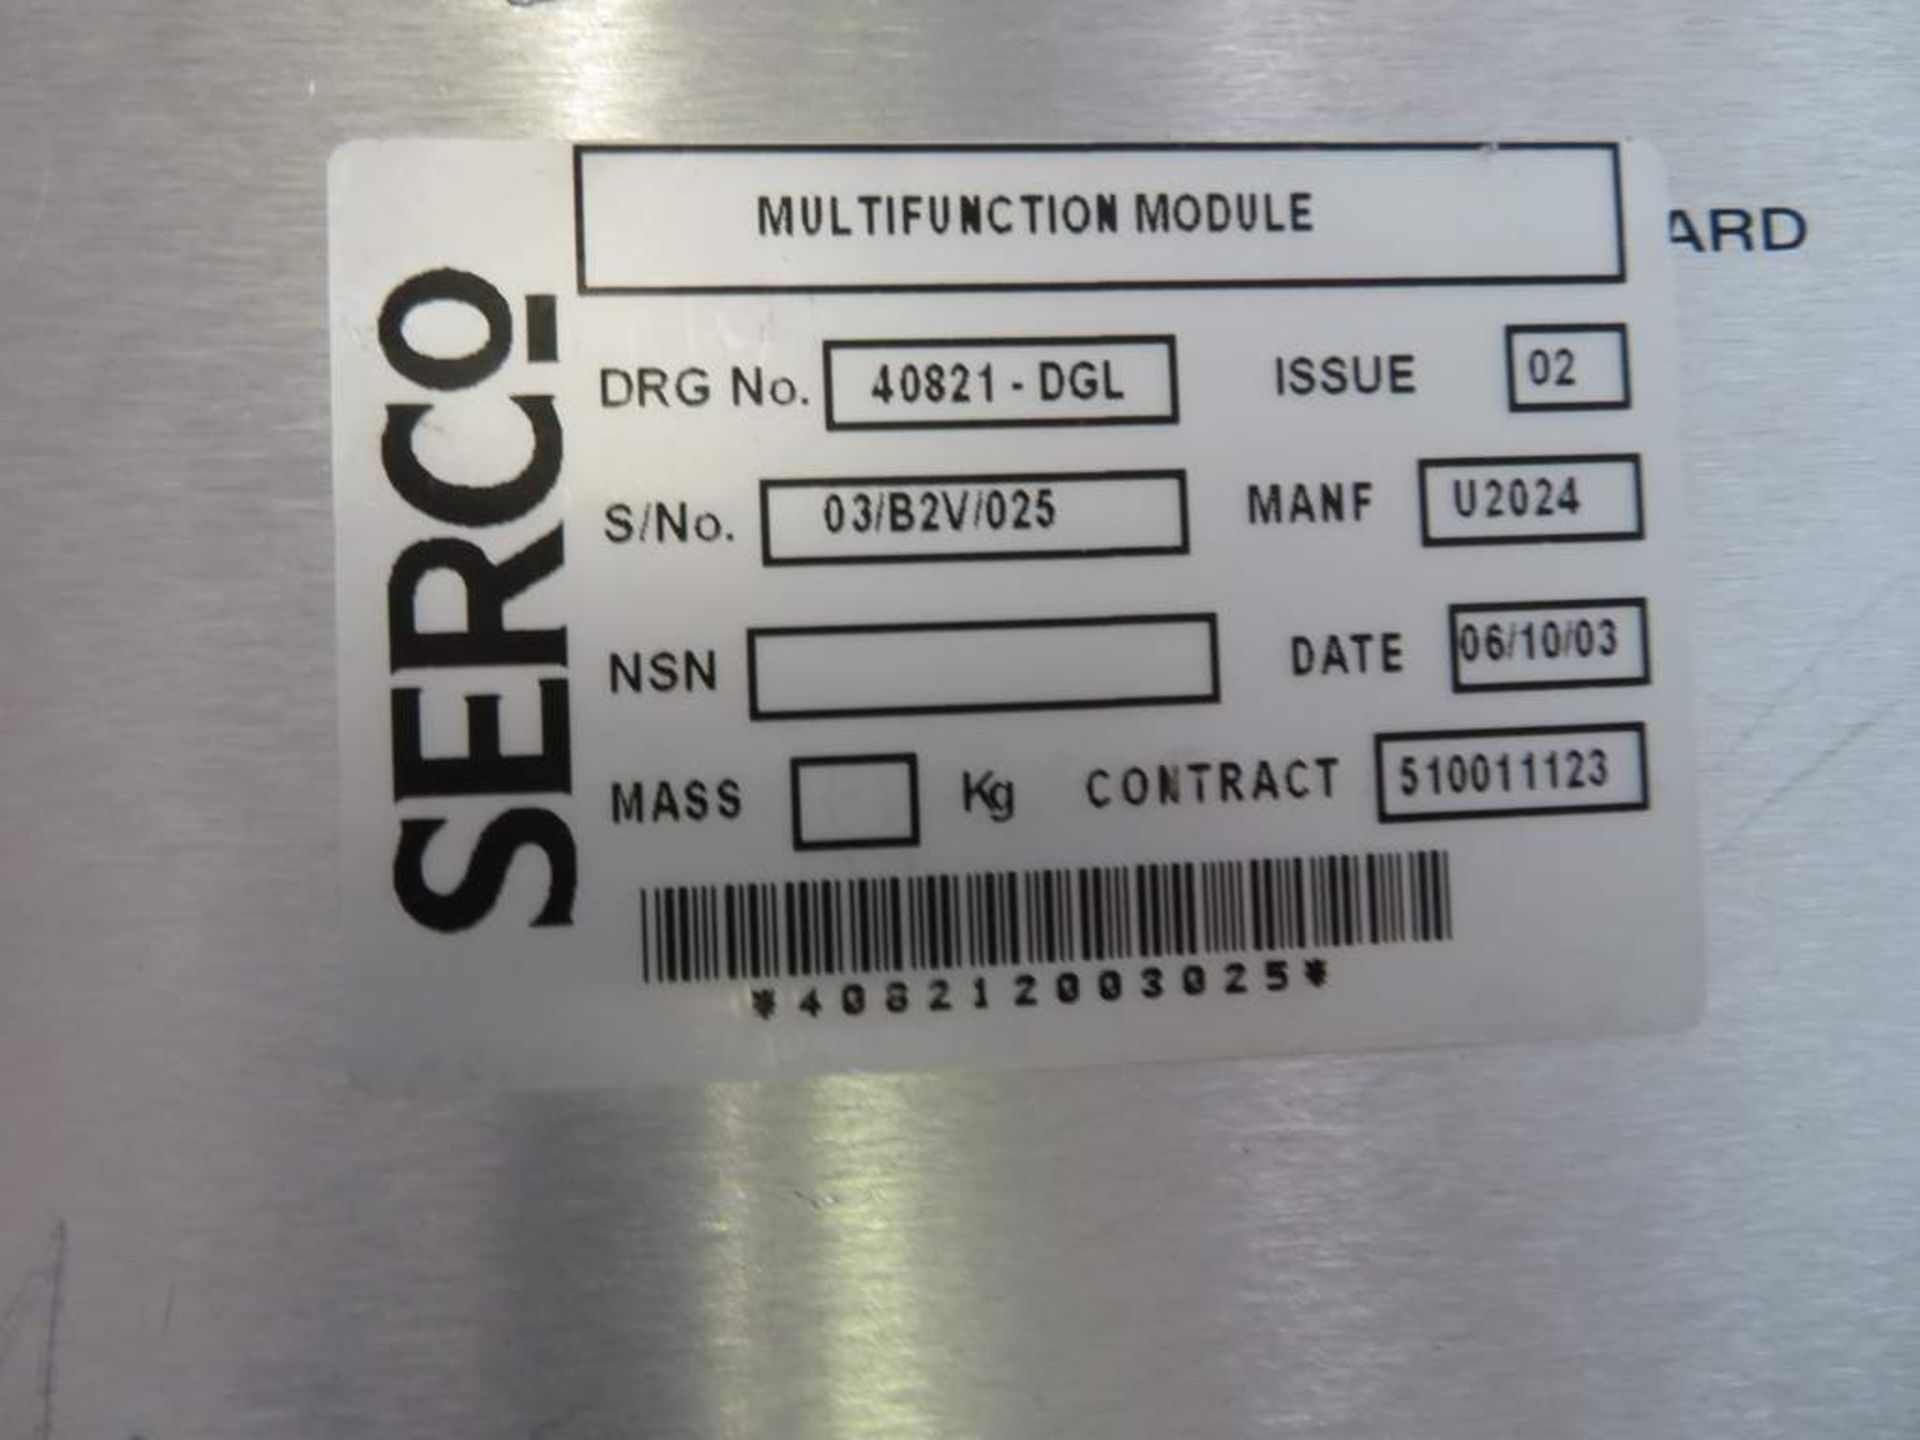 10x Serco Multifunction module card 40821-DGL - Image 2 of 2